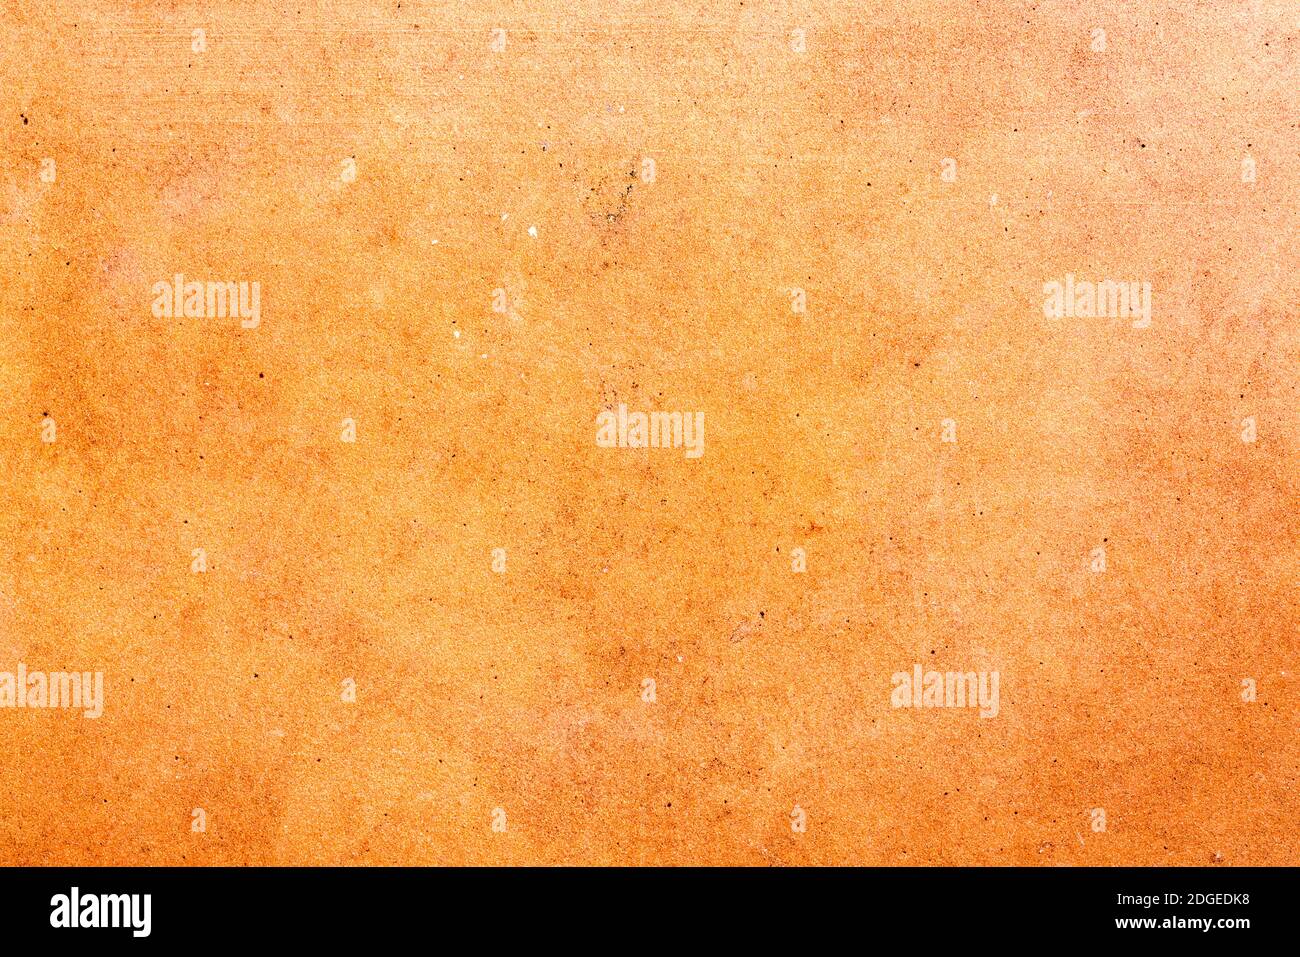 Texture of dirty ceramic tile floor Stock Photo